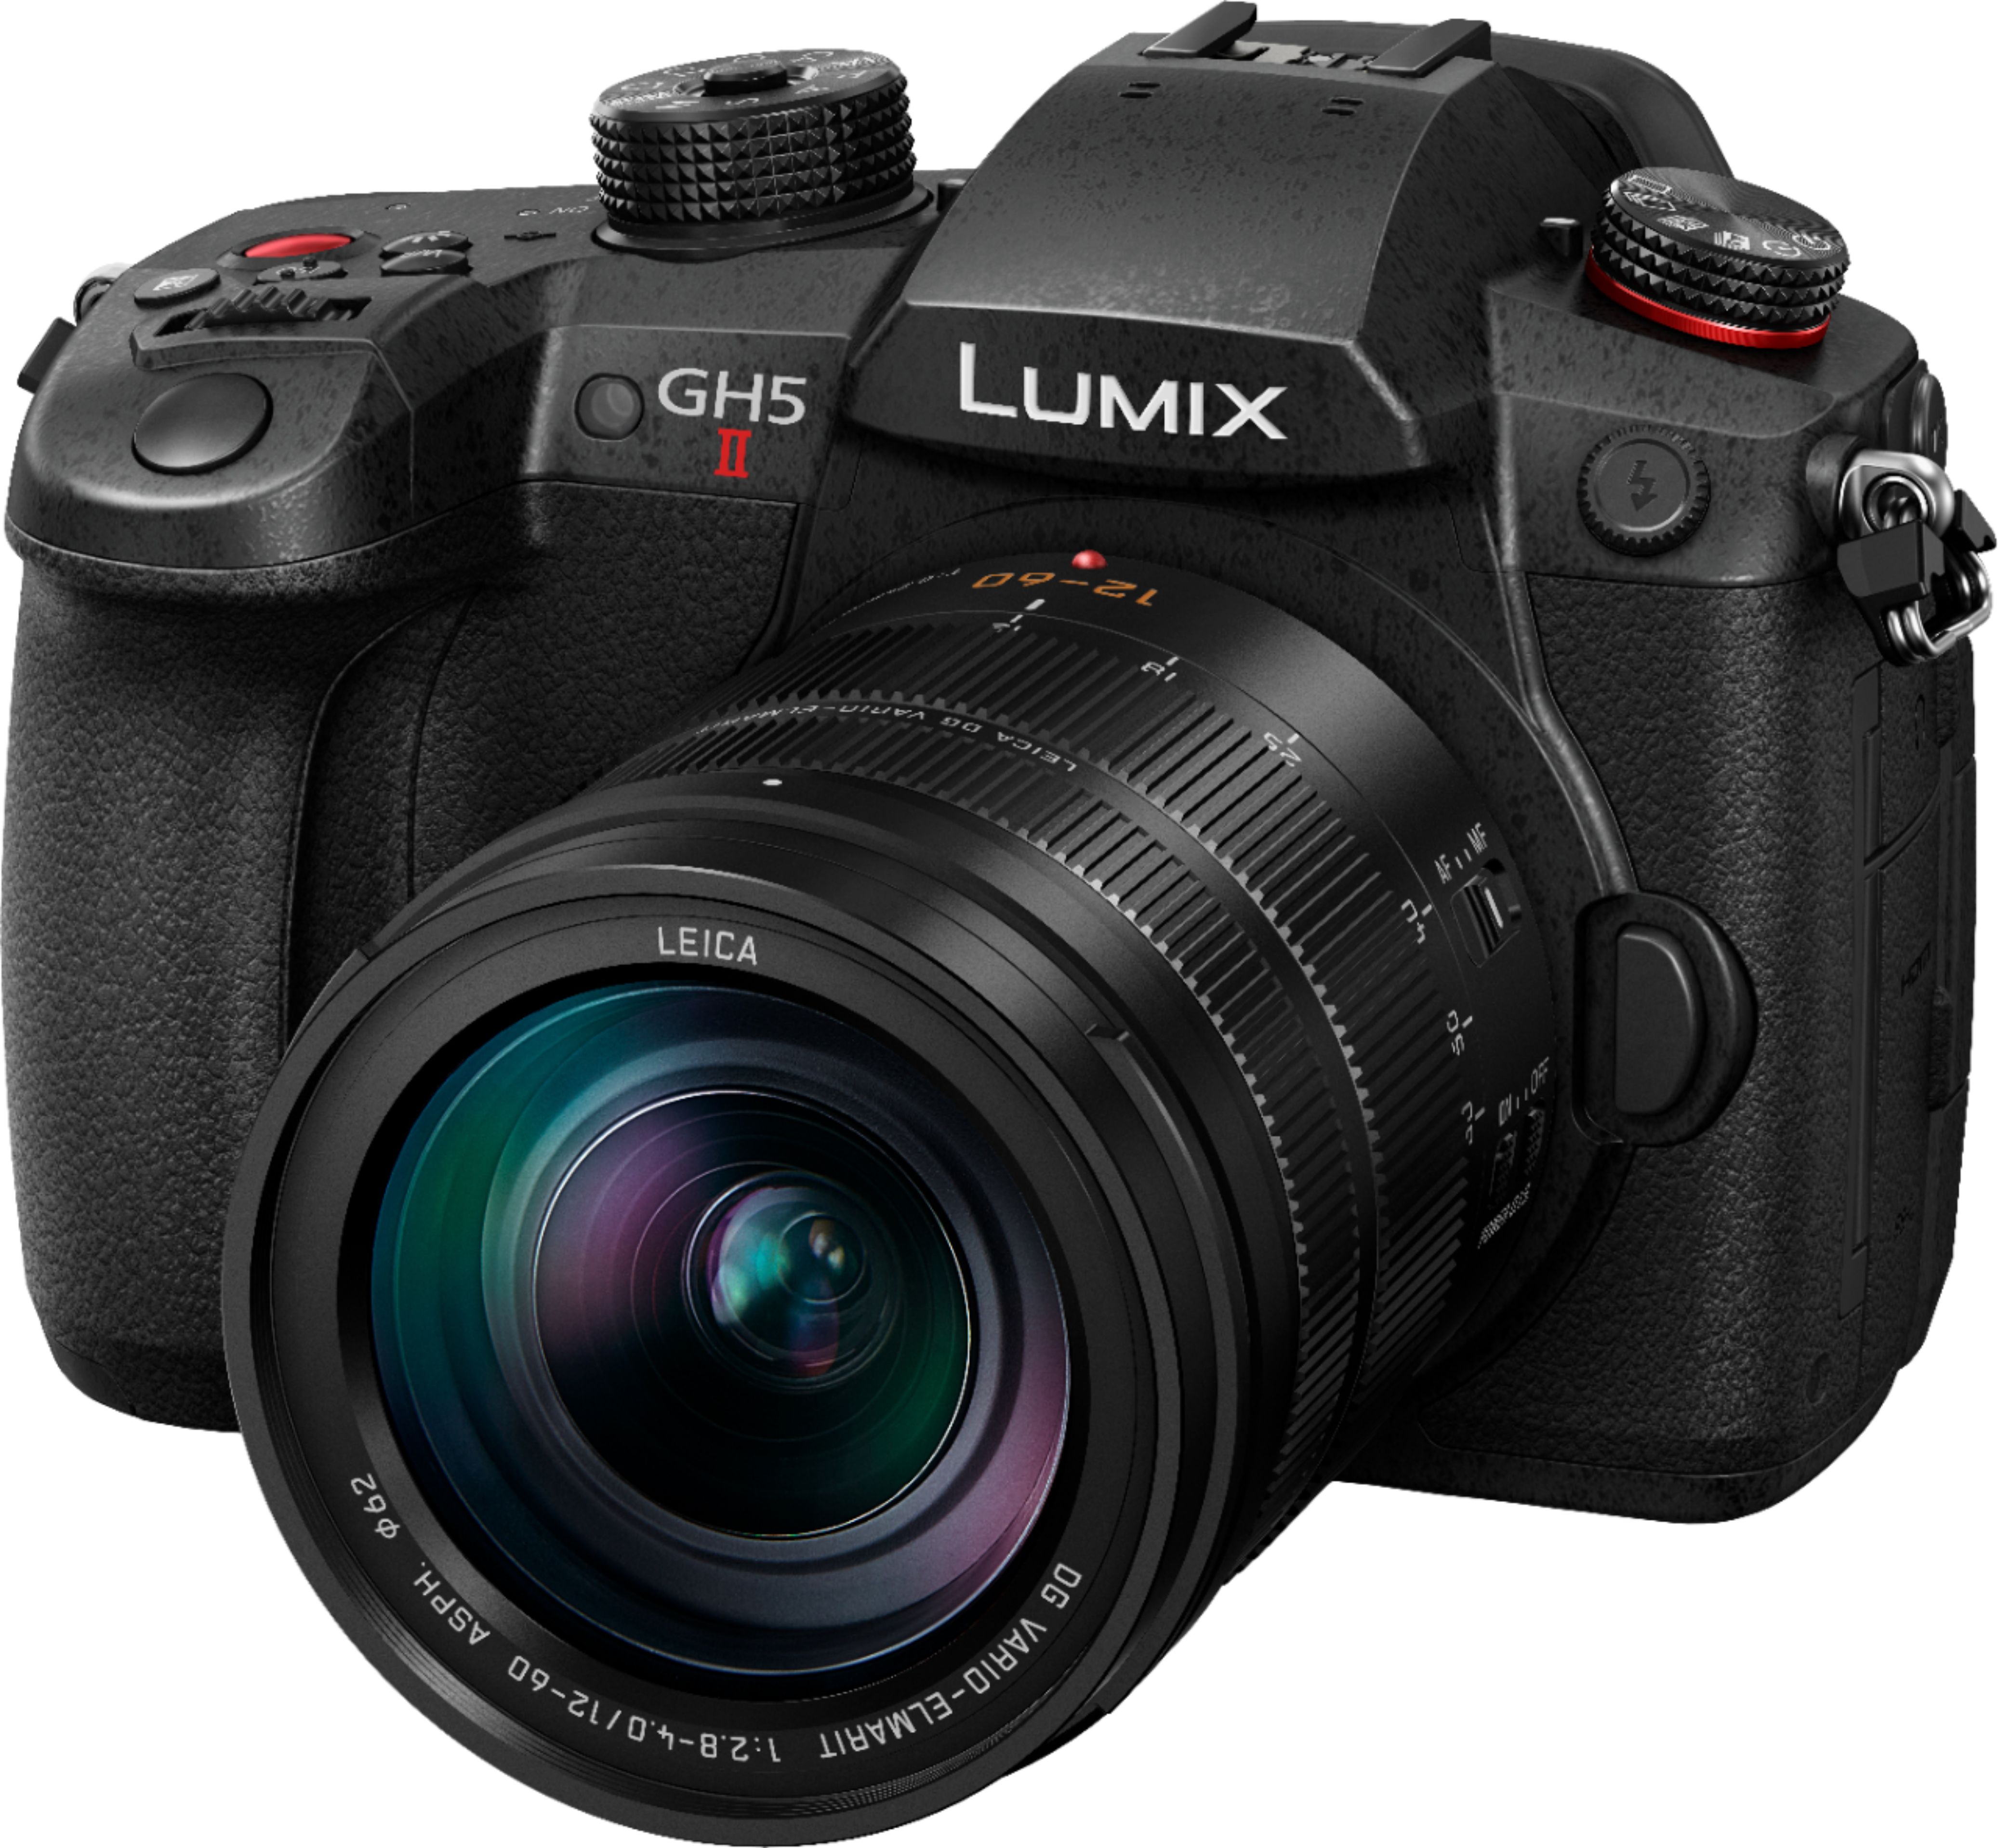 Angle View: Panasonic - LUMIX GH5M2 4K Video Mirrorless Camera with 12-60mm F2.8-4.0 Leica Lens - Black